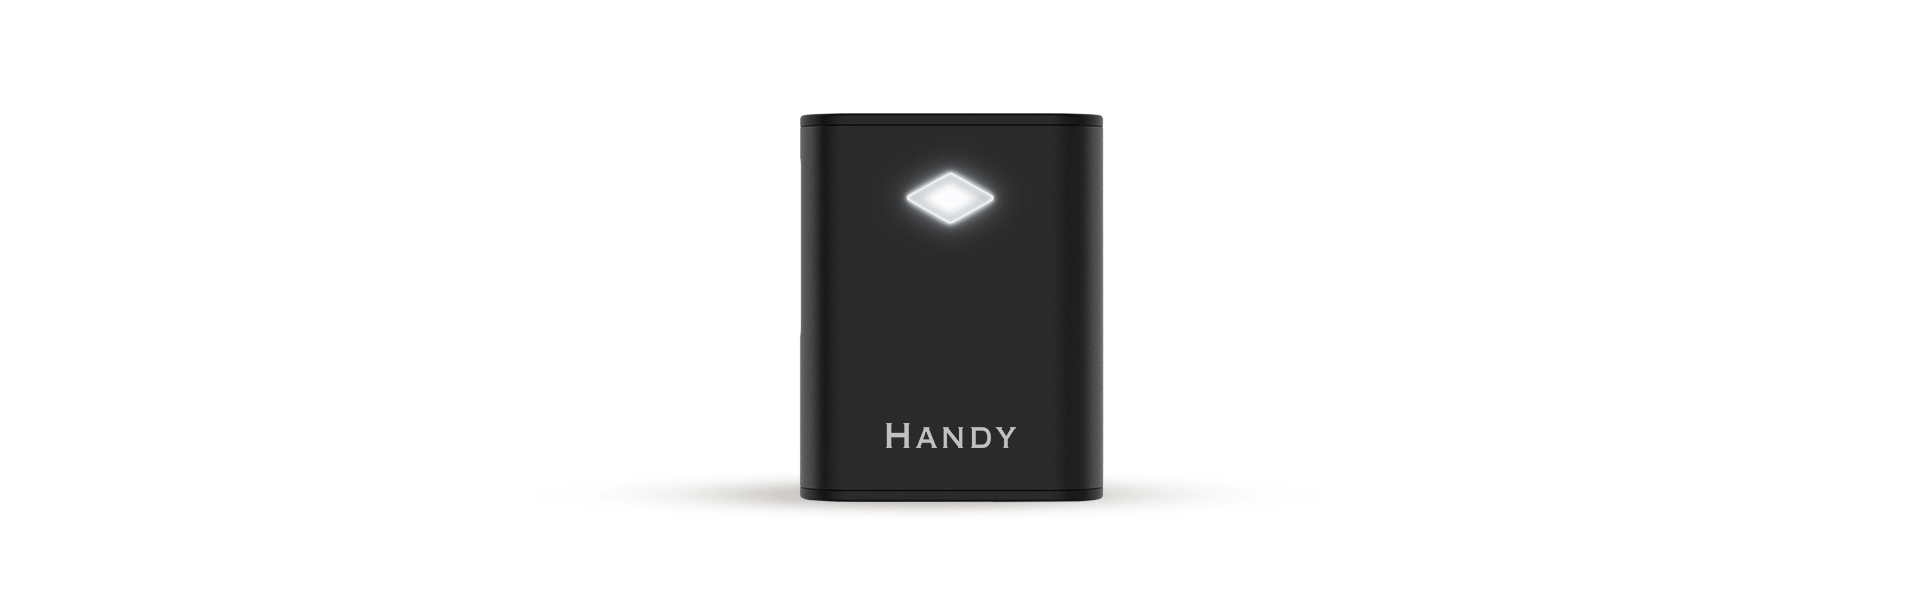 Yocan Handy Vape Battery features 10 SEC Preheat Function